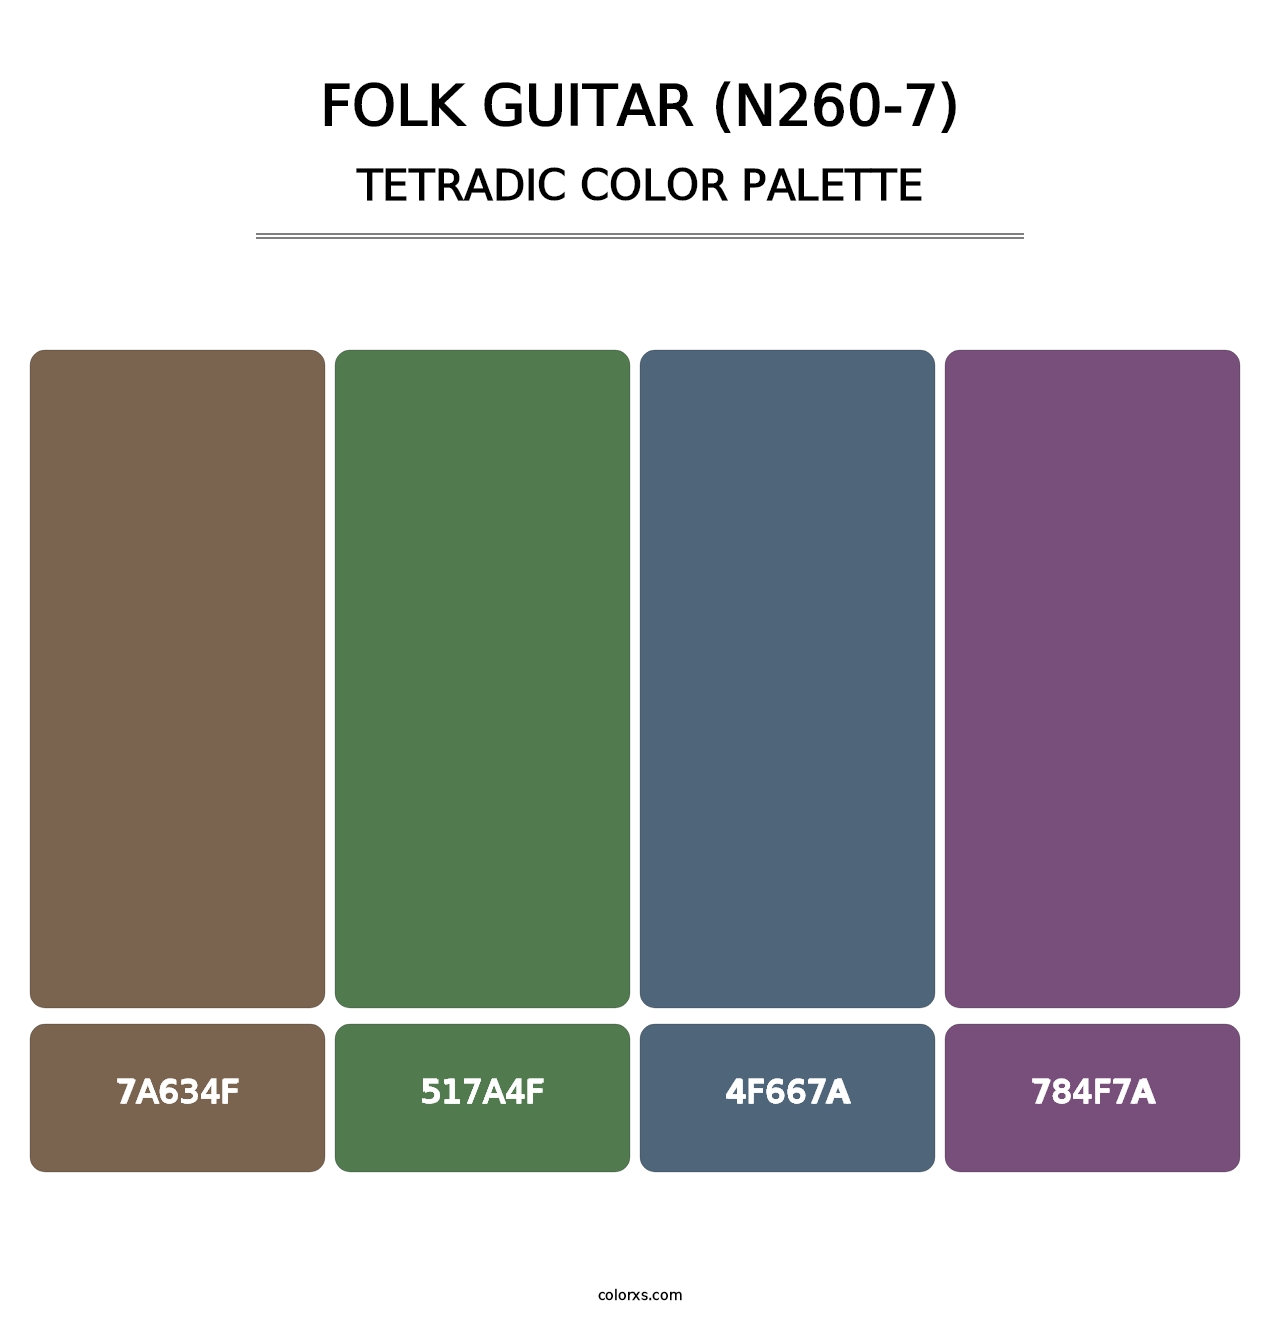 Folk Guitar (N260-7) - Tetradic Color Palette